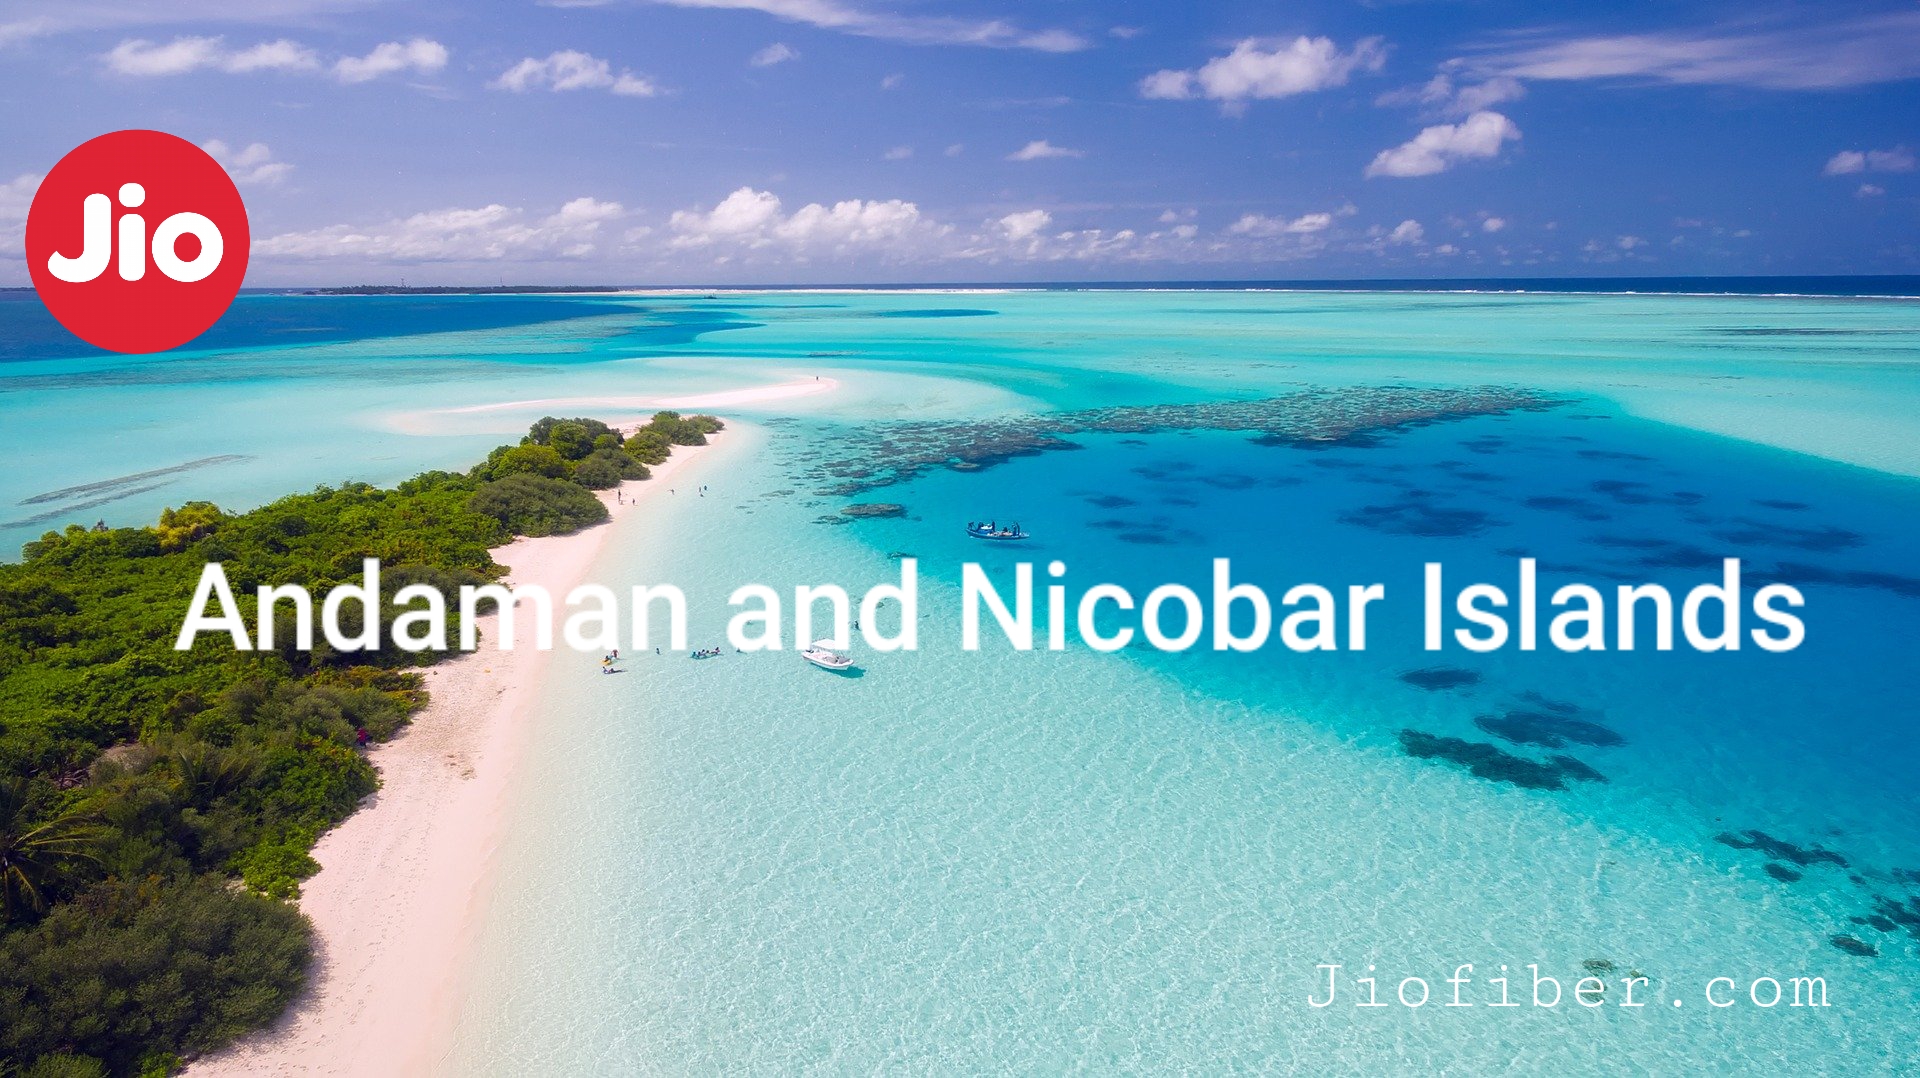 Jio Fiber in Andaman and Nicobar Islands Registrations, Plans, Customer Care